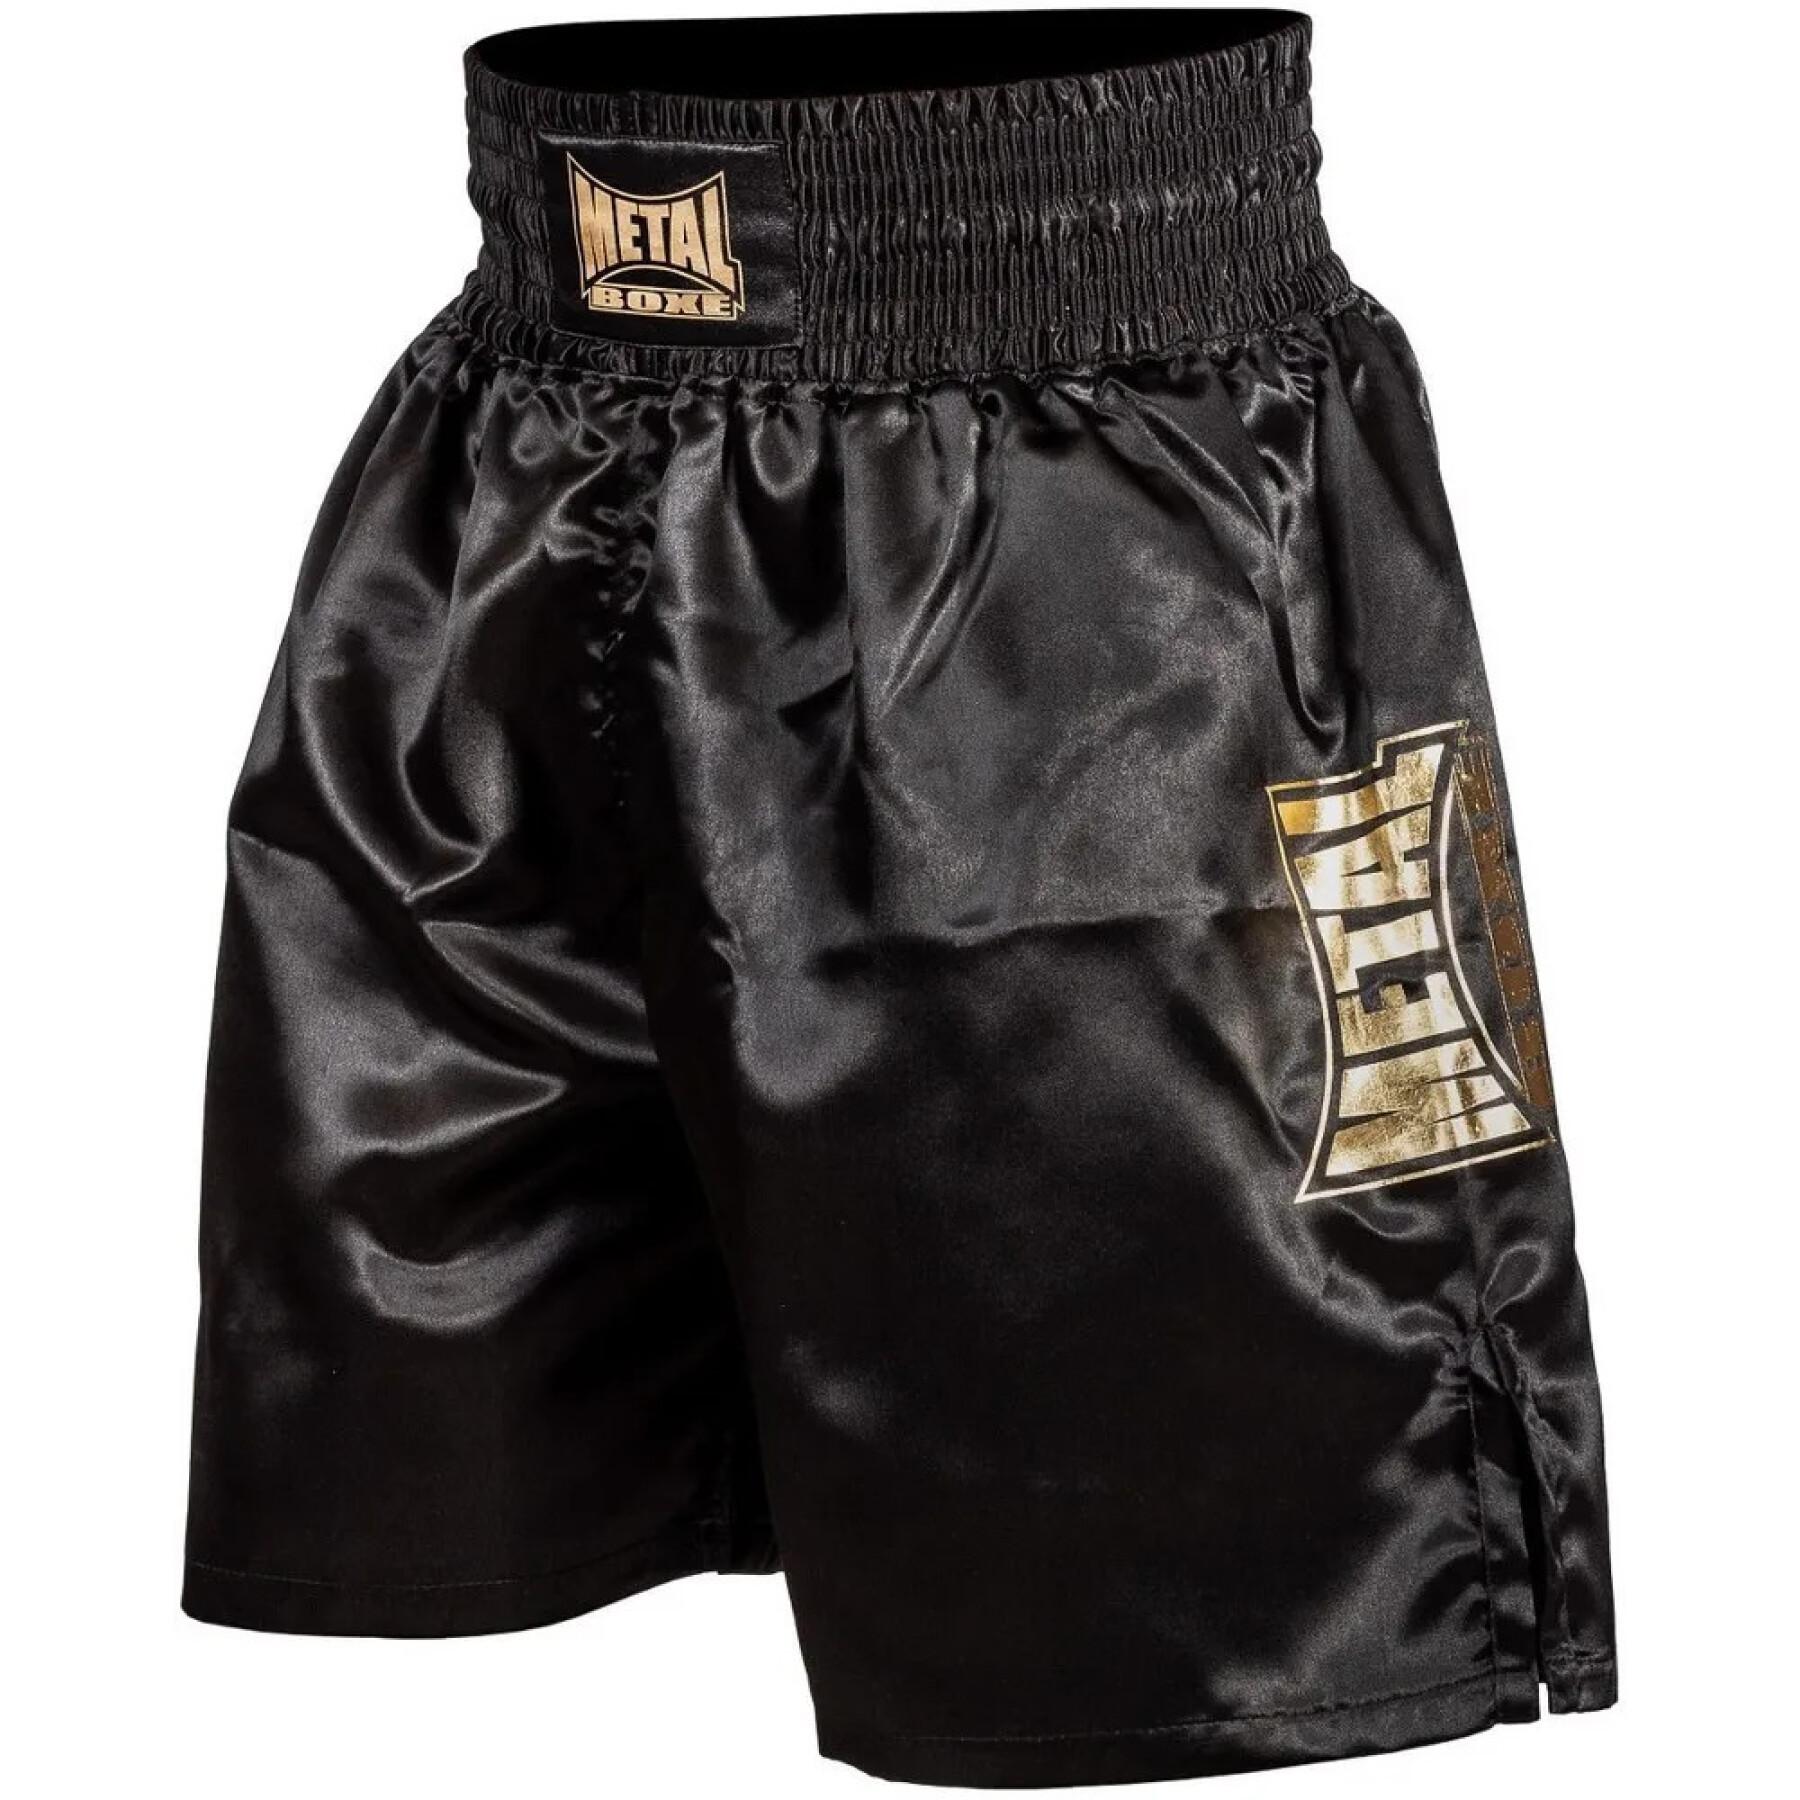 Short boxe anglaise Metal Boxe Pro Line Military - Shorts